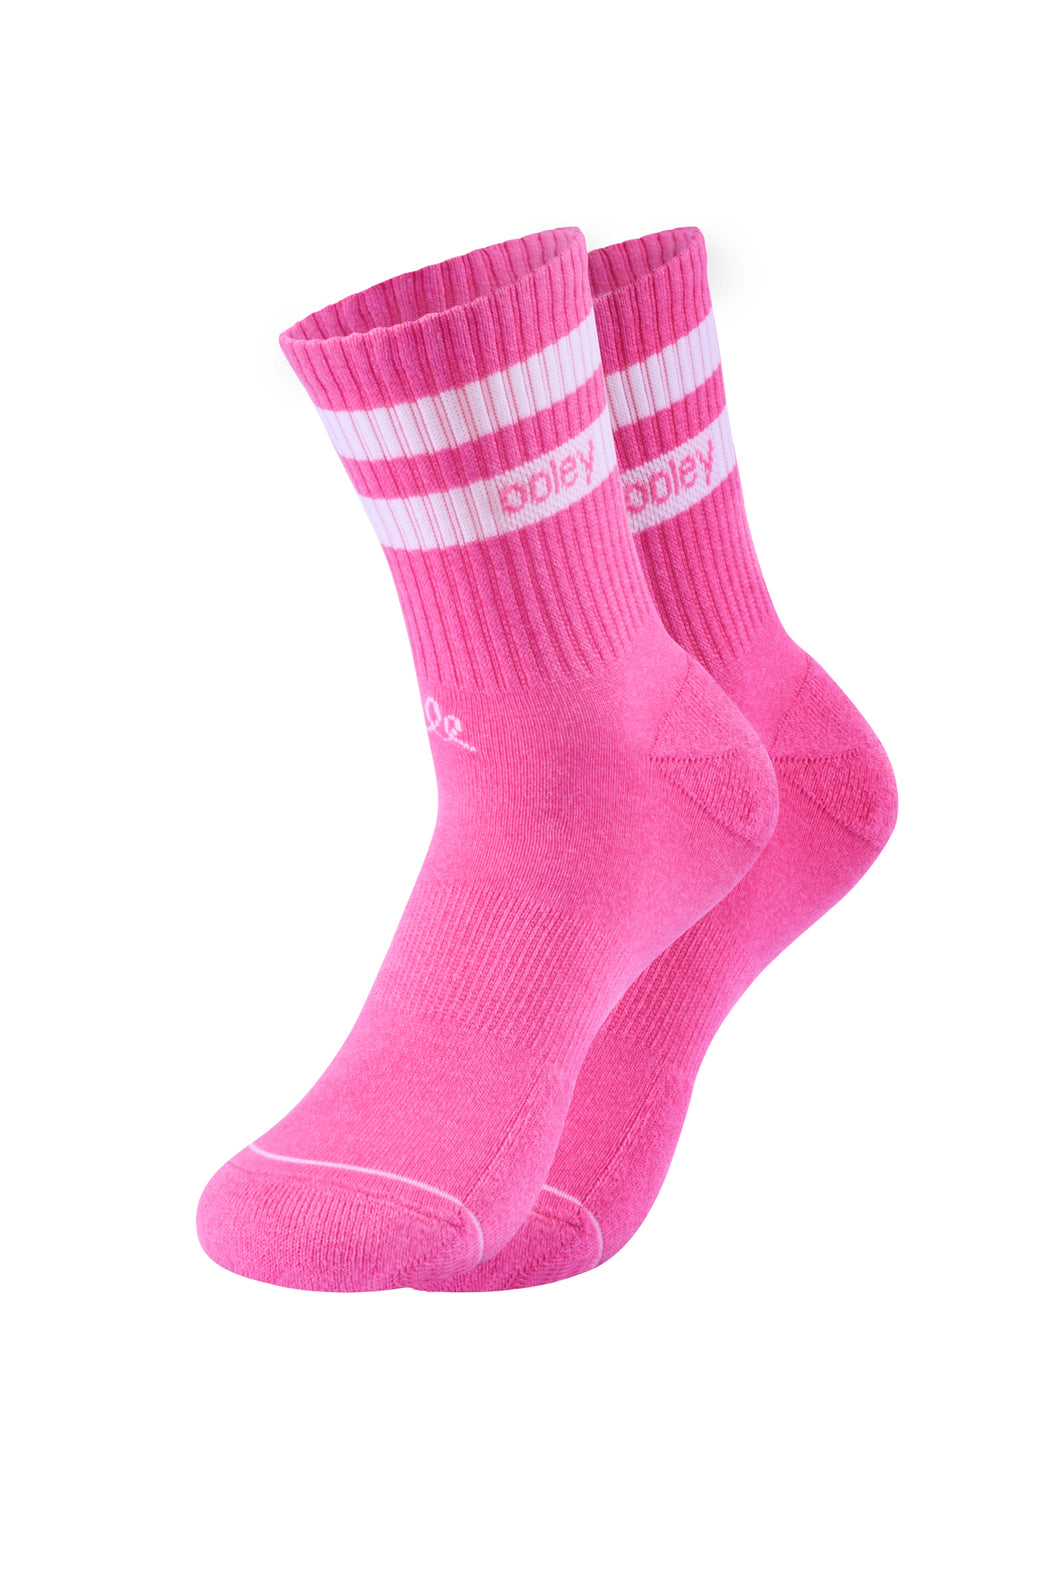 OOLEY Socks Streetmood Pink